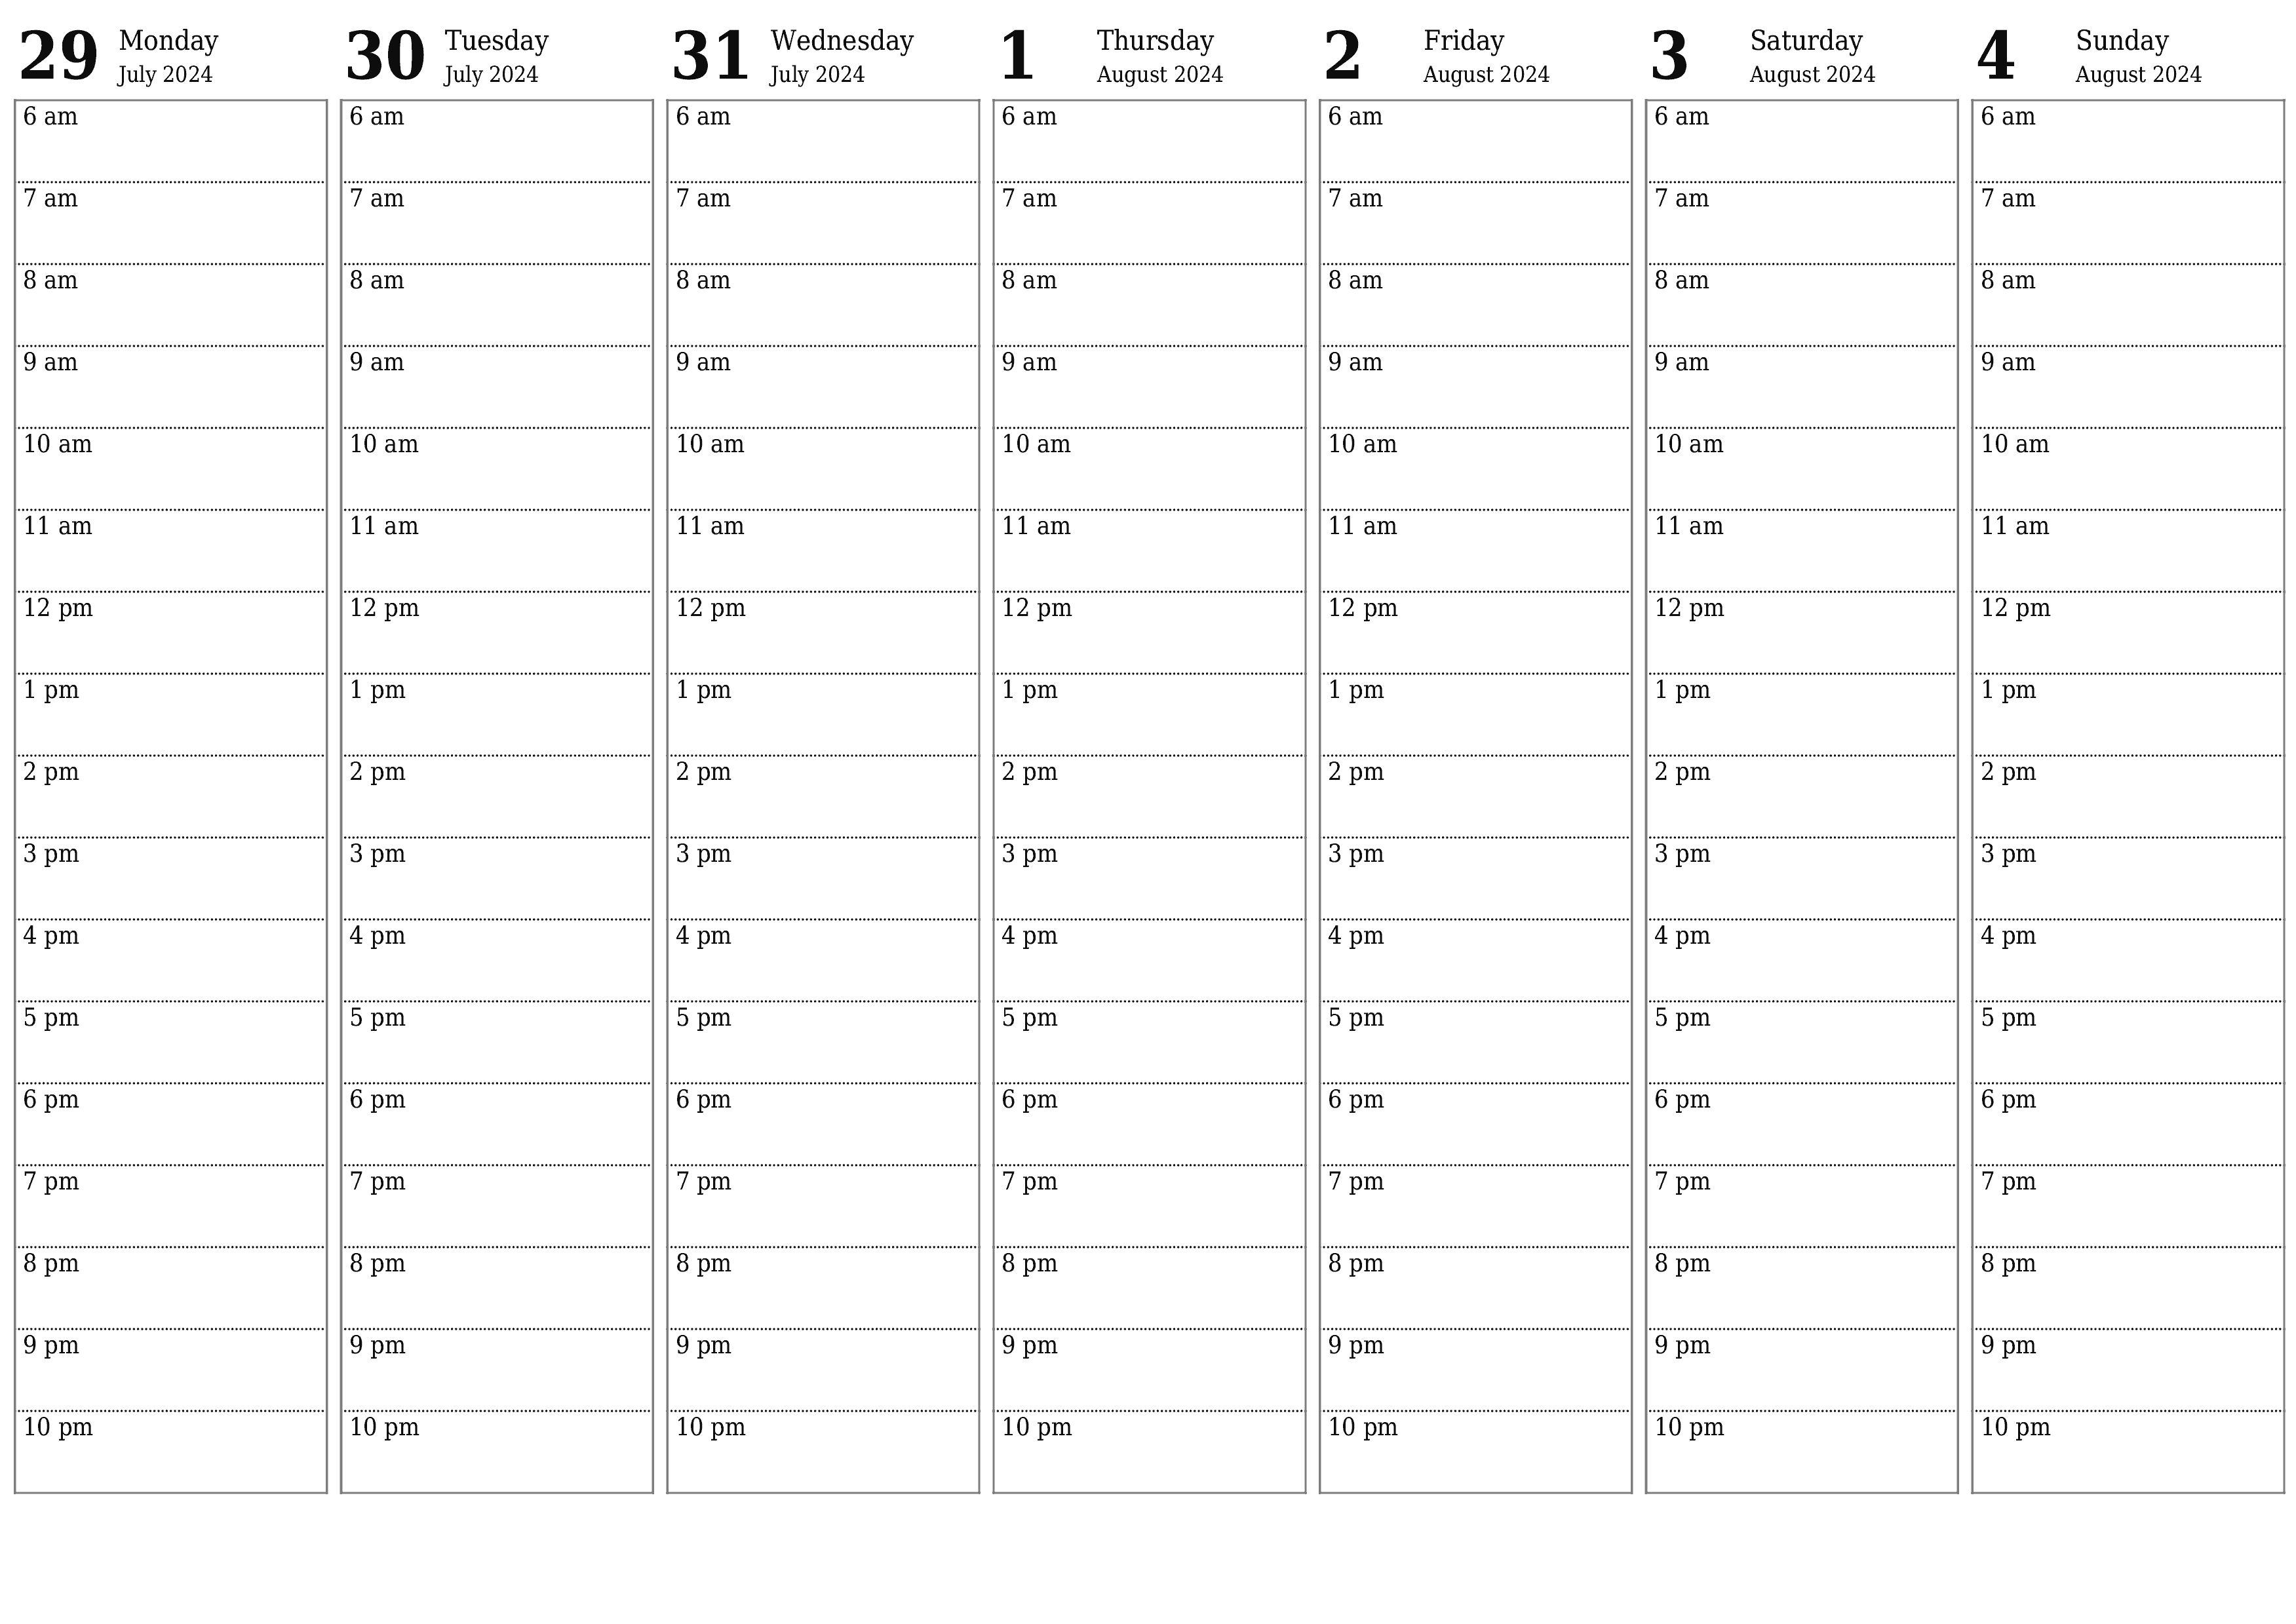 Blank calendar August 2024